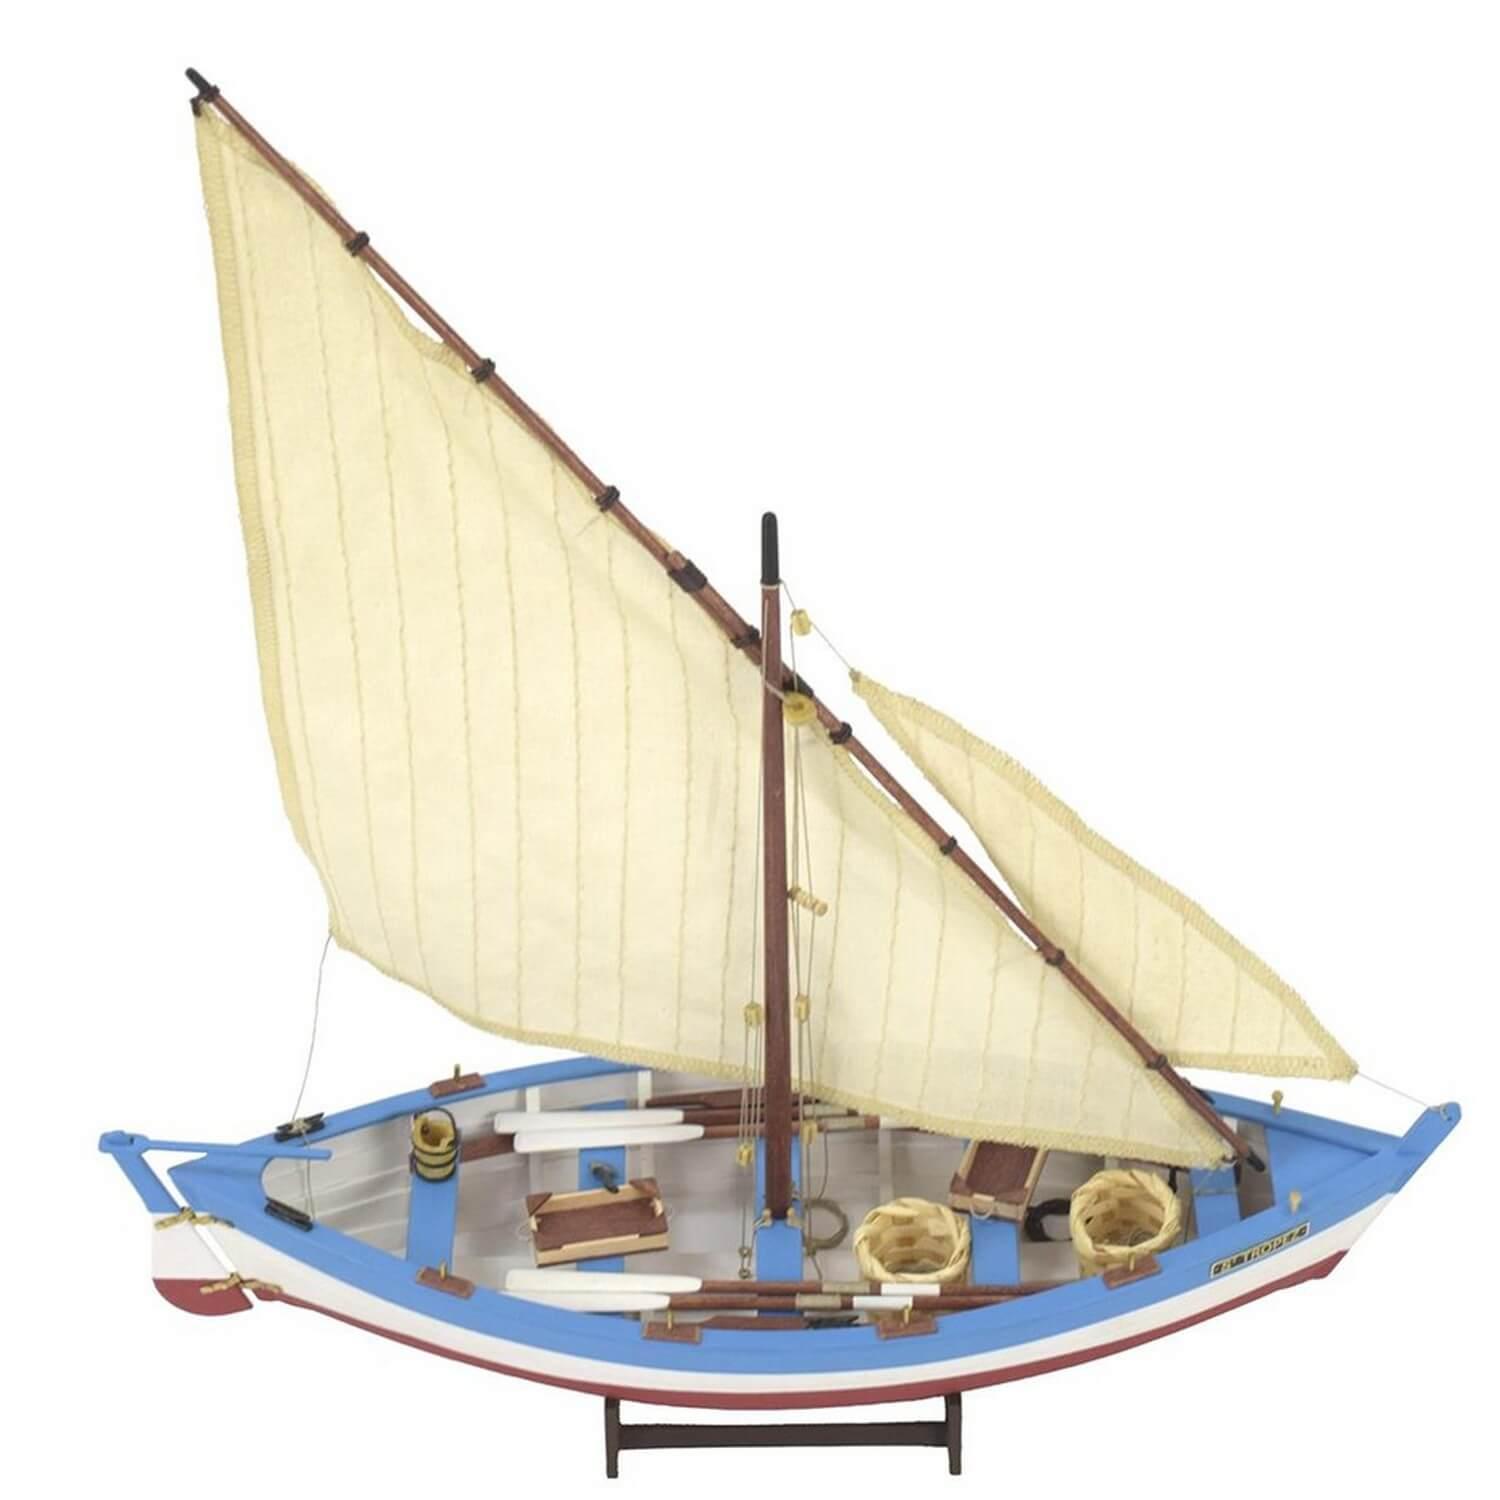 Wooden model boat: La Provençale fishing boat - Artesania - Scale